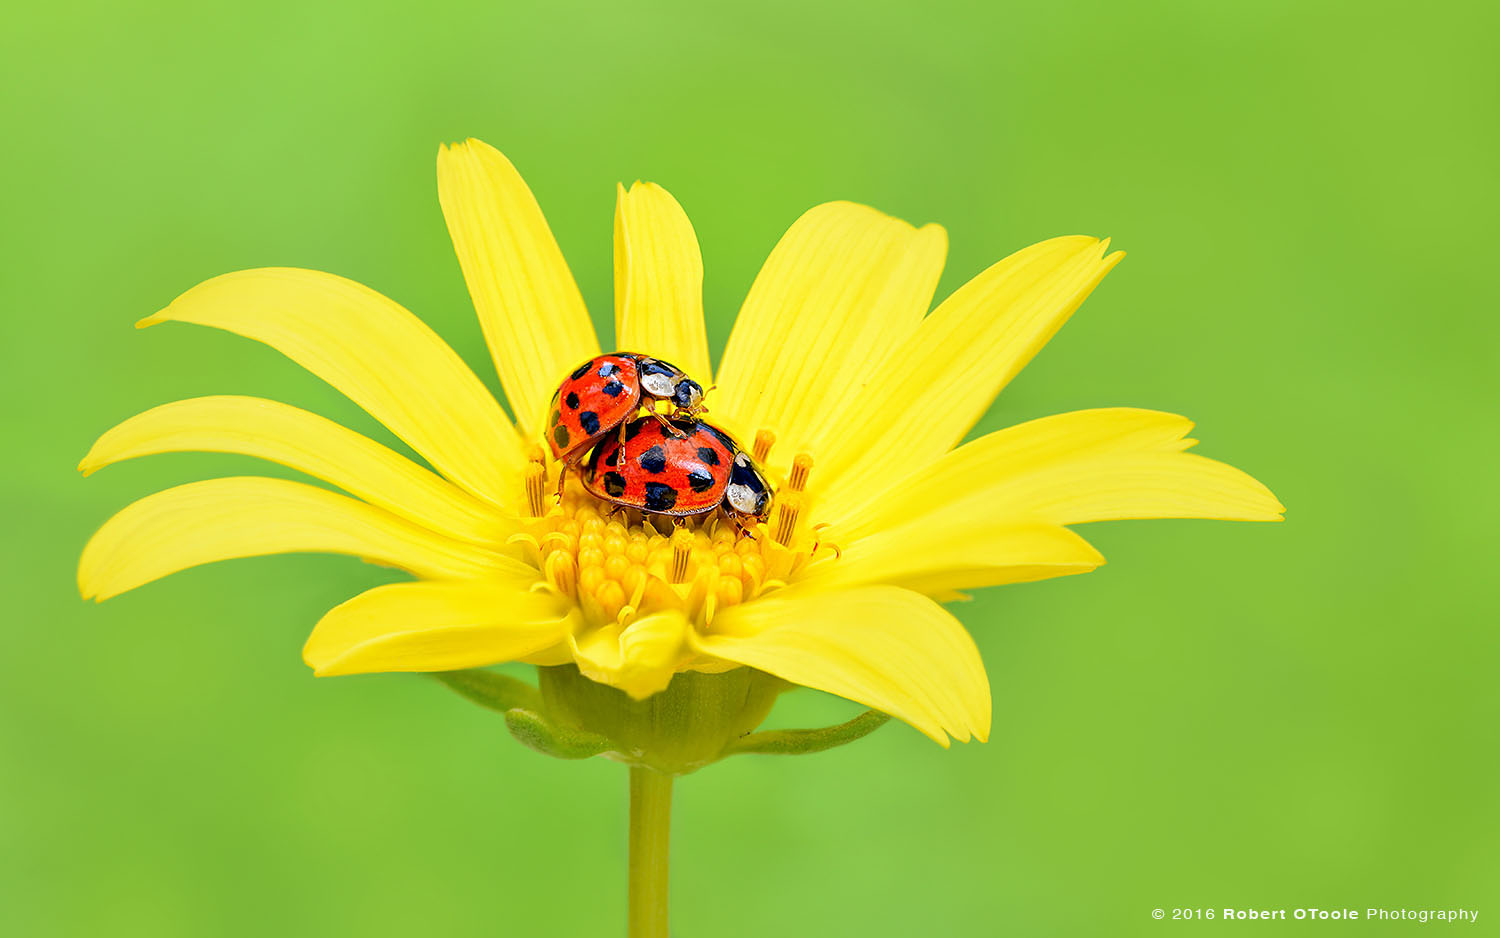 Mating Ladybugs on Yellow Flower